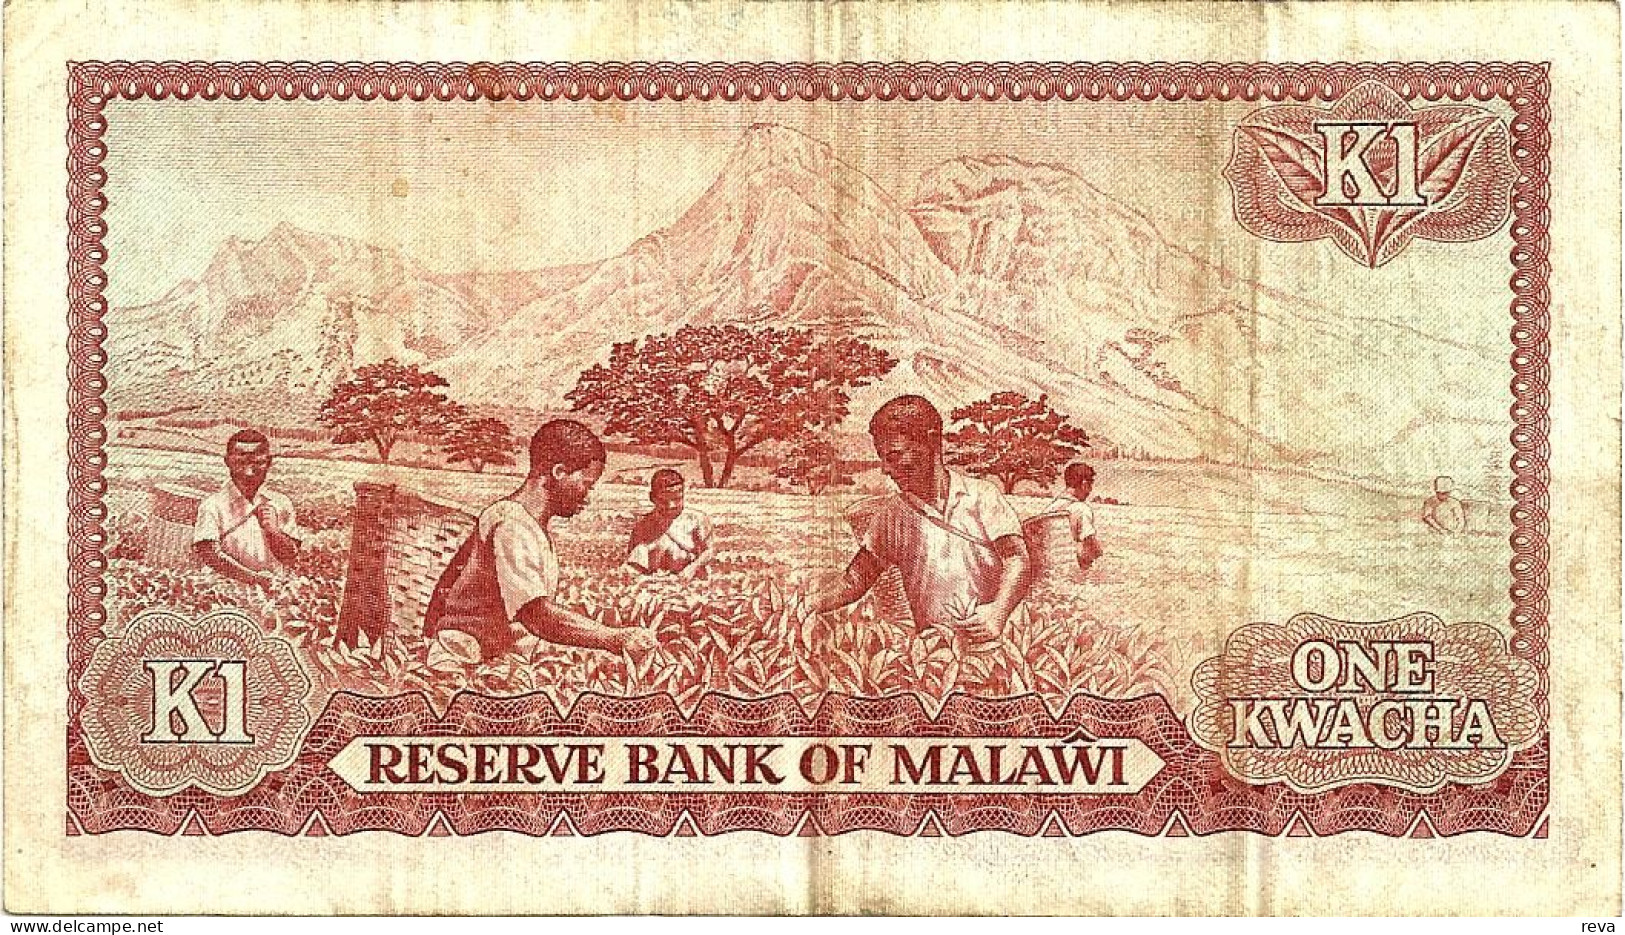 MALAWI 1 KWACHA PURPLE MAN FRONT LANDSCAPE MAN BACK DATED 01-01-1981 P.14 F+ READ DESCRIPTION - Malawi